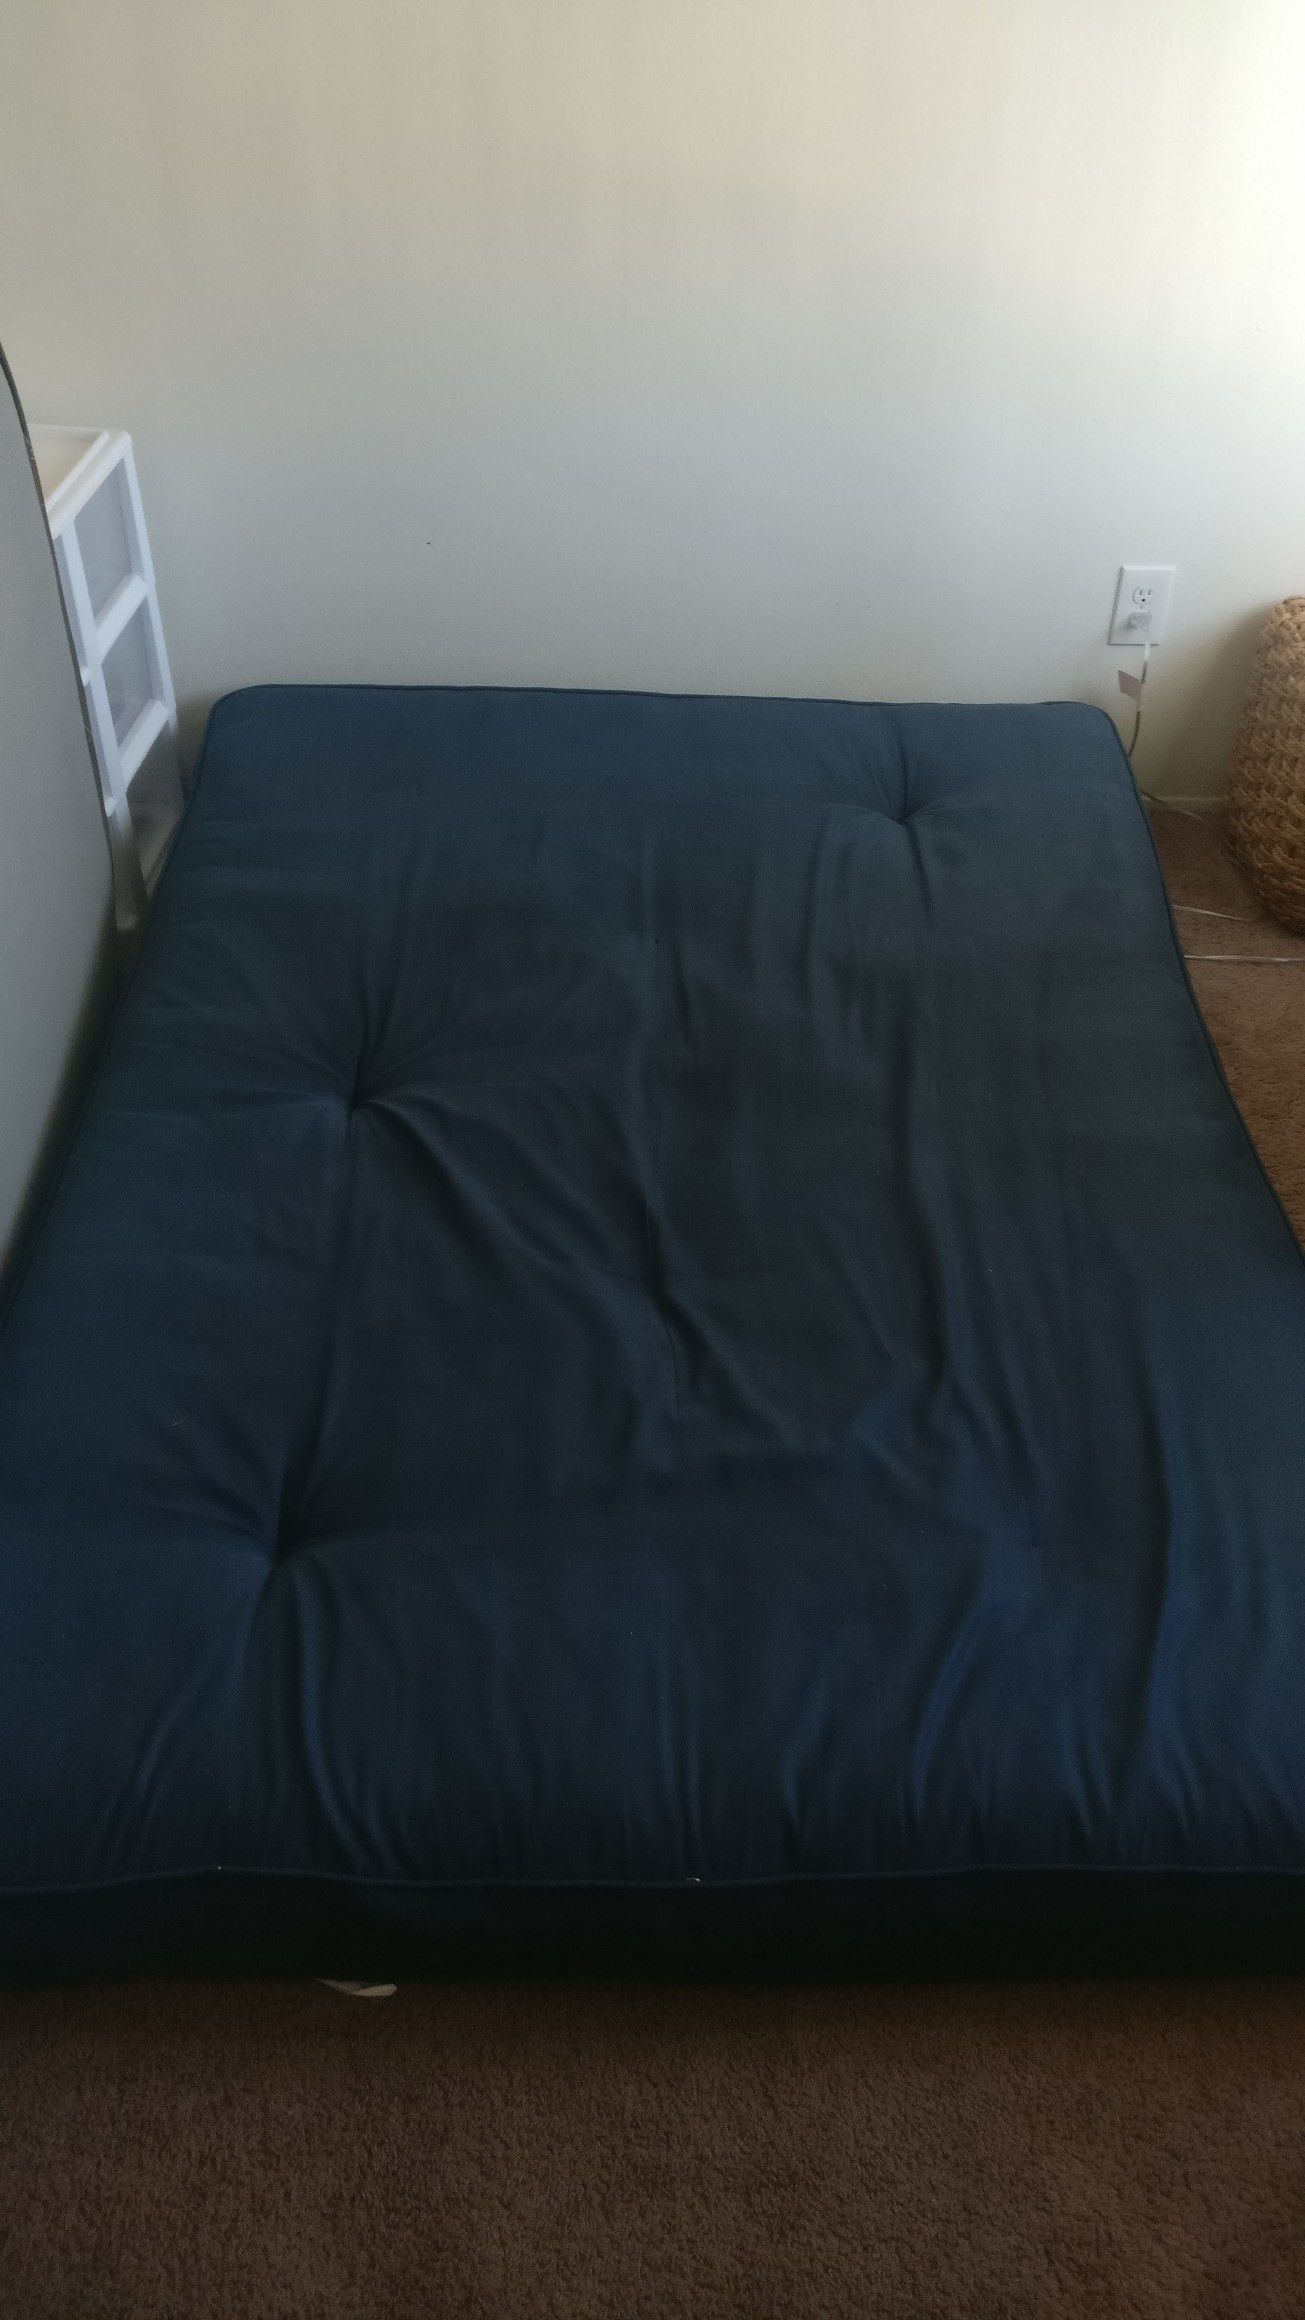 6" navy tufted futon full size mattress